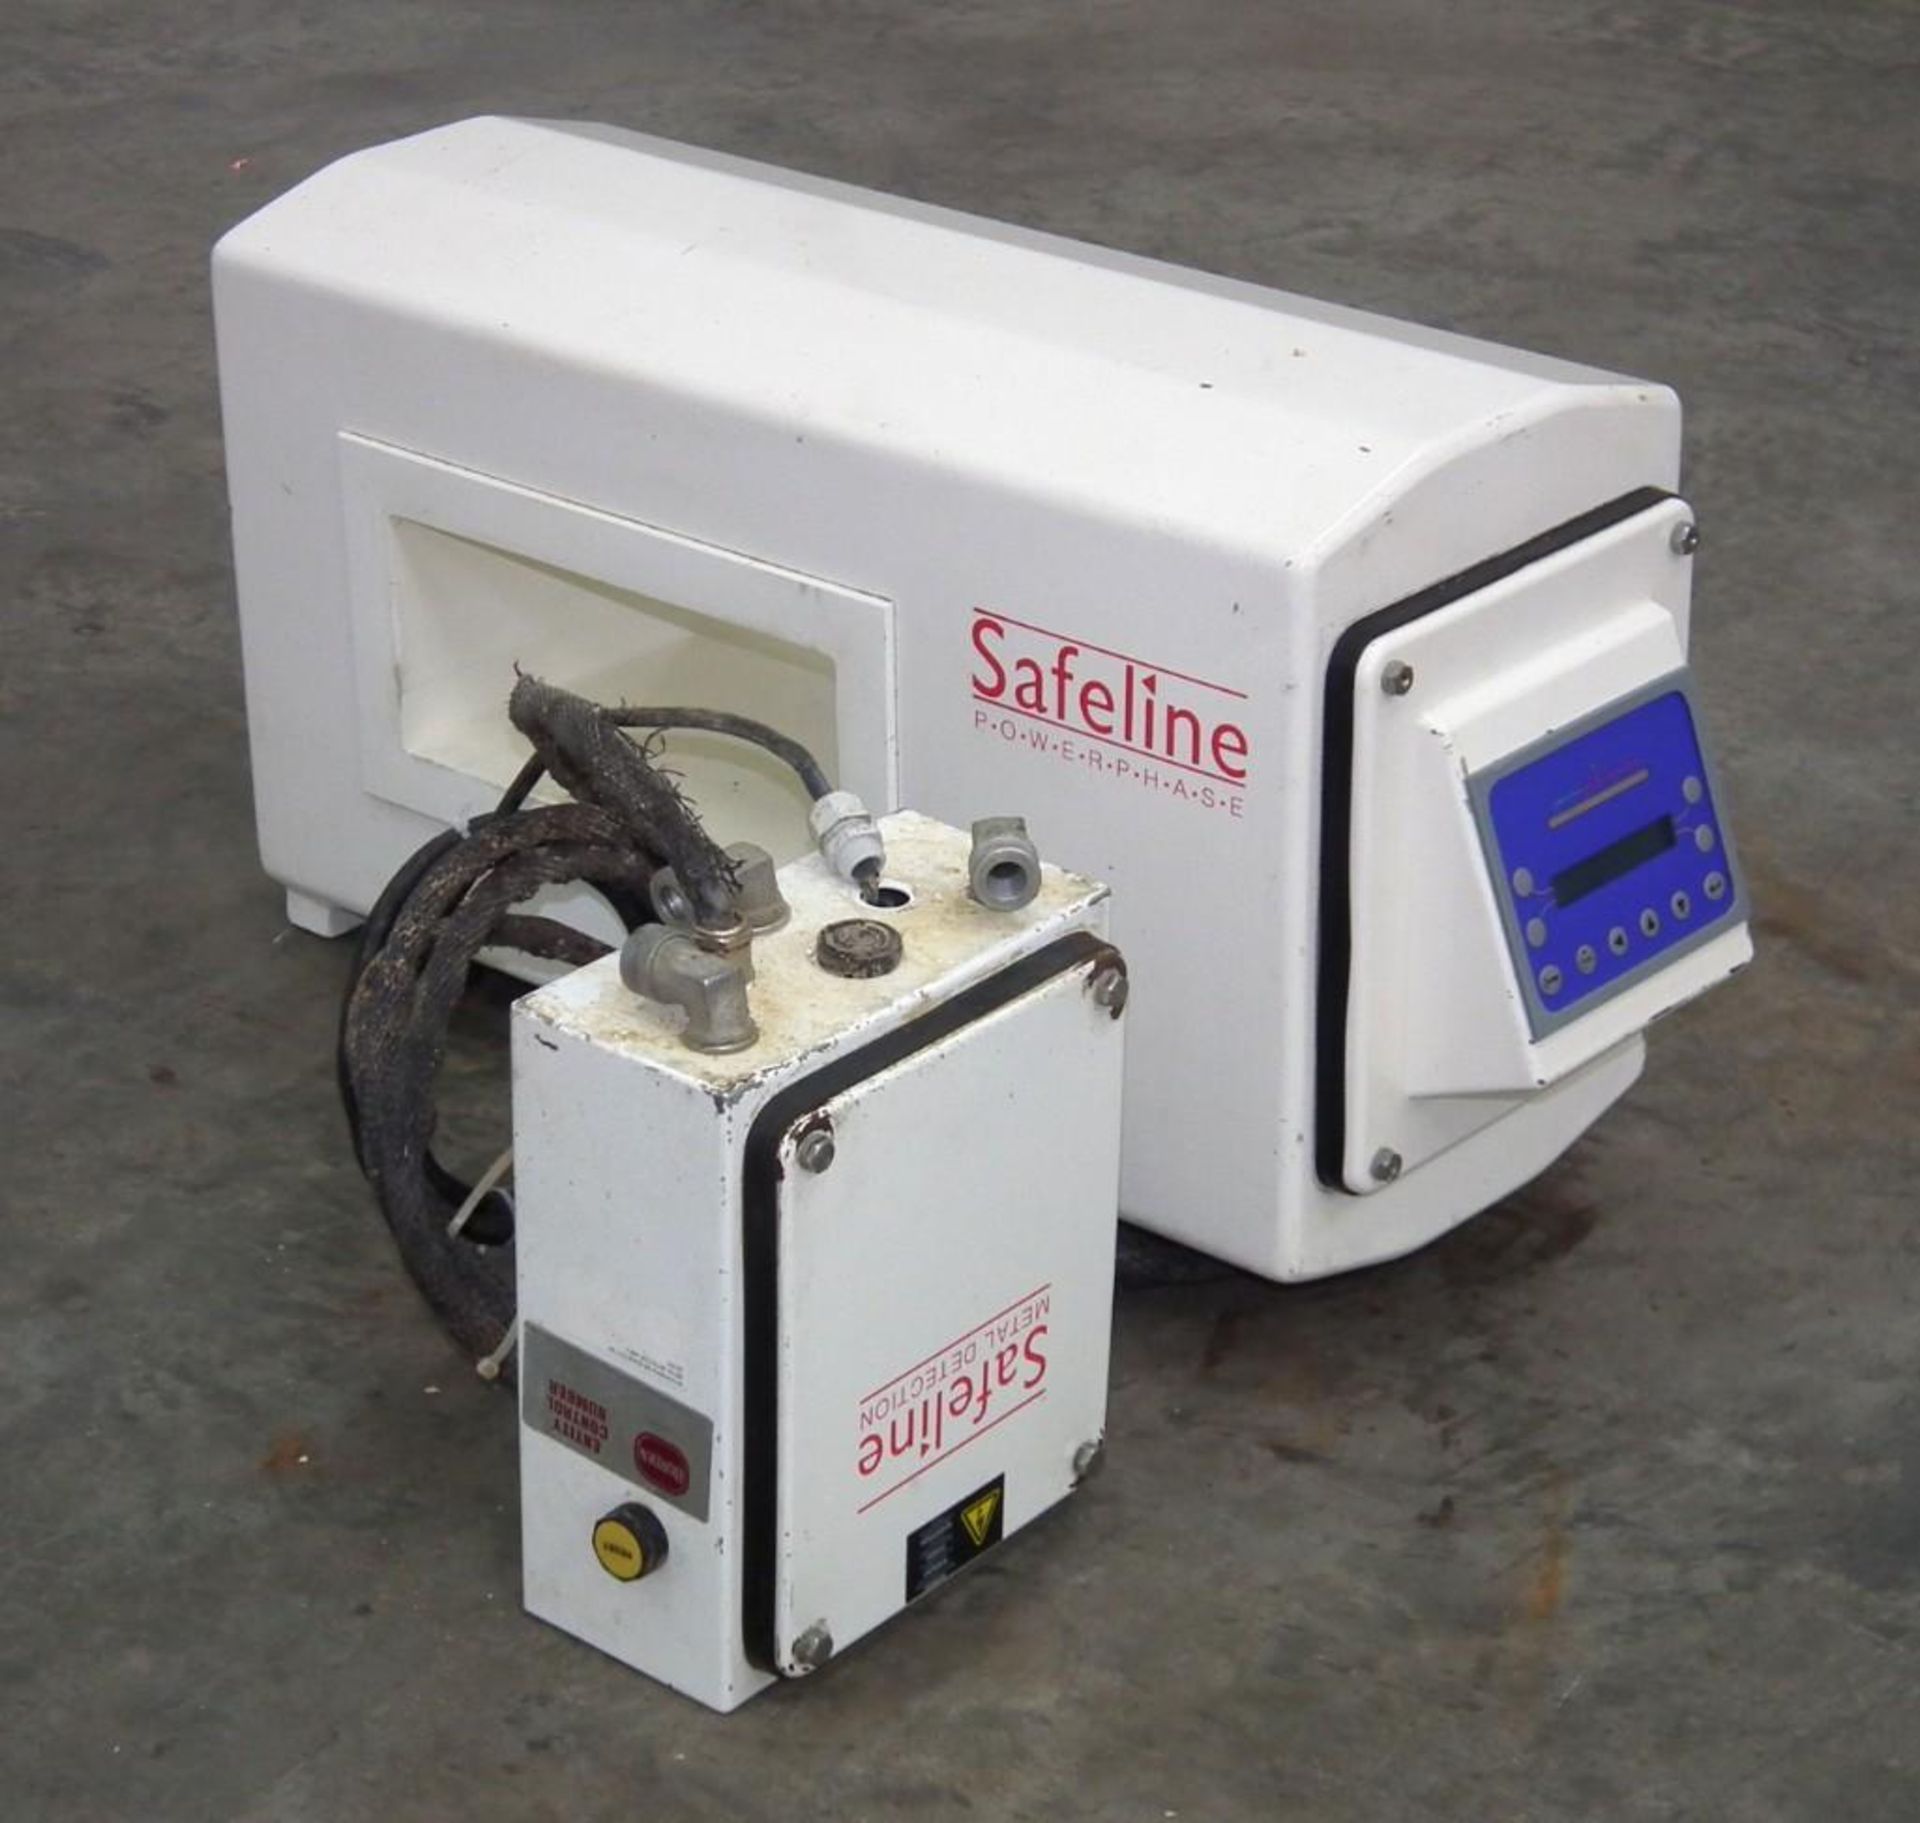 Safeline Metal Detector Powerphase 12" Wide x 5" H - Image 3 of 8